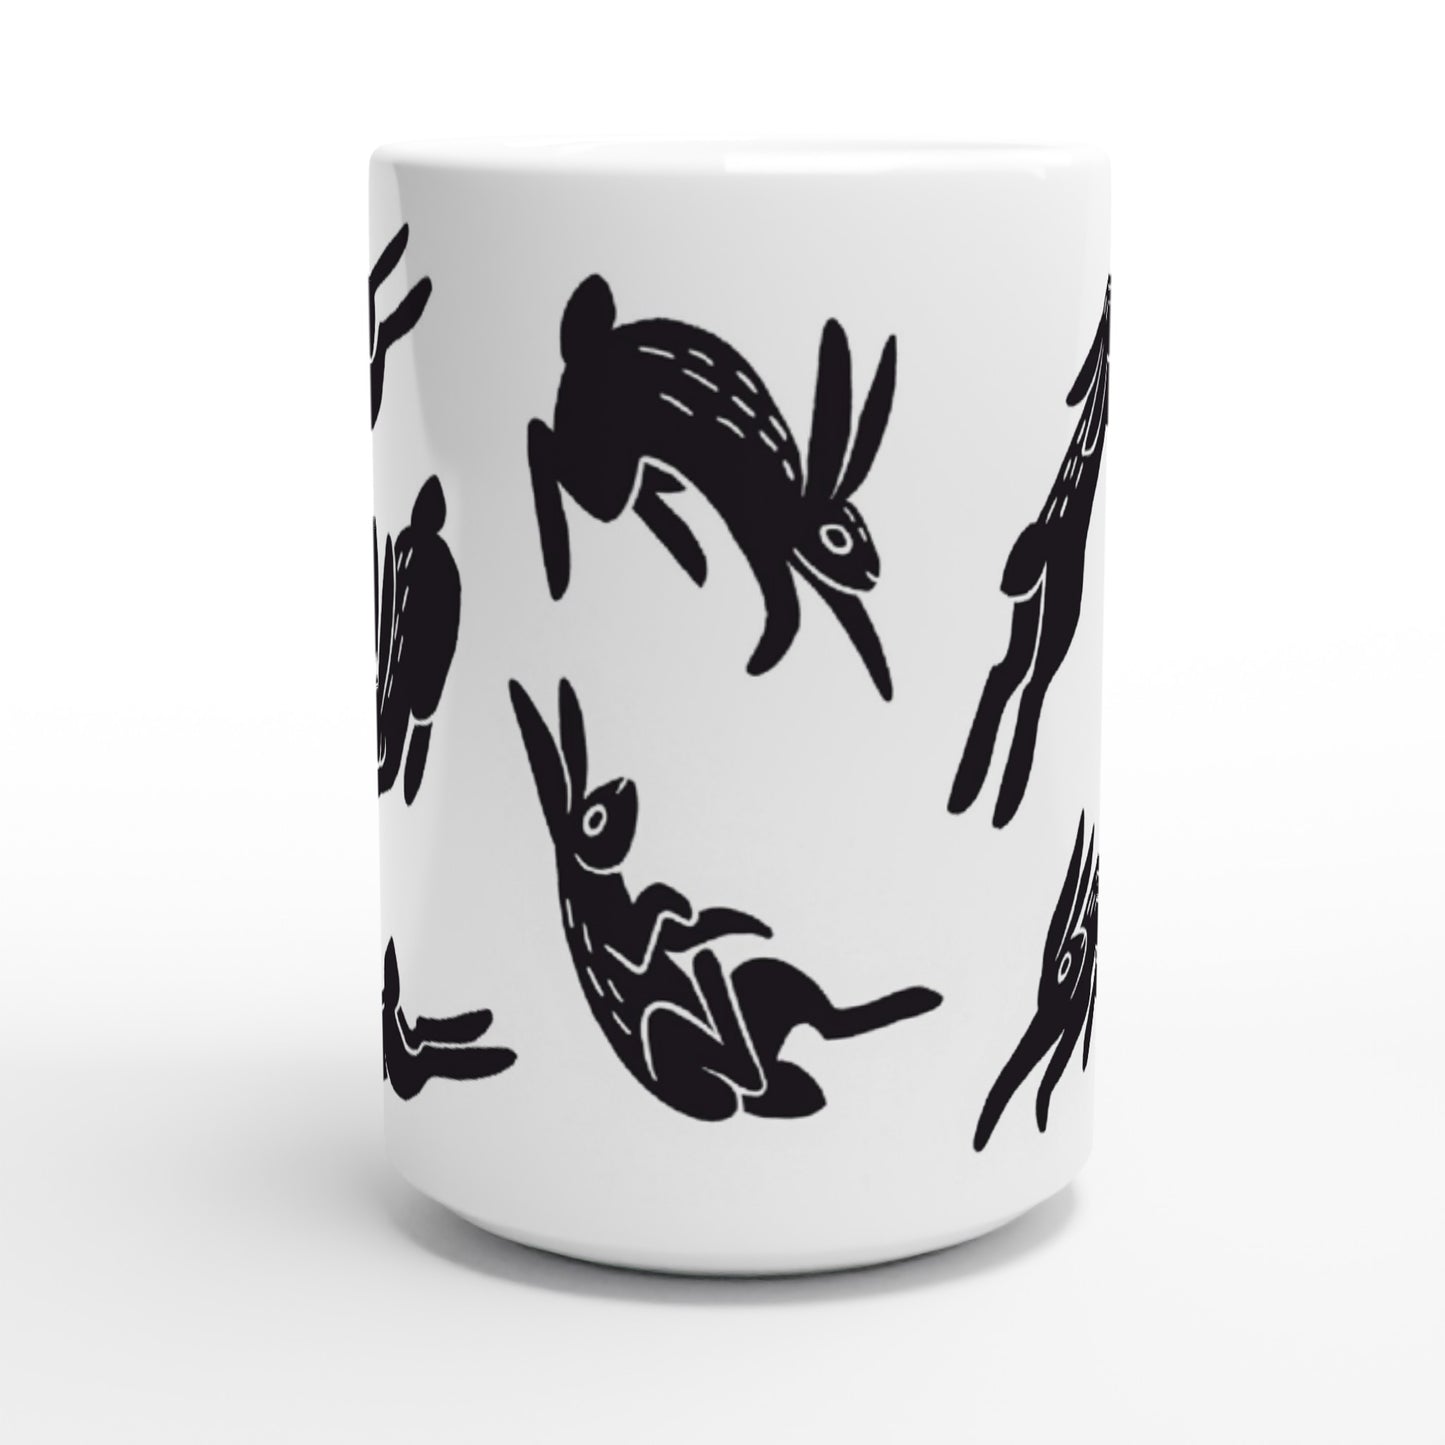 Running Rabbits - White 15oz Ceramic Mug